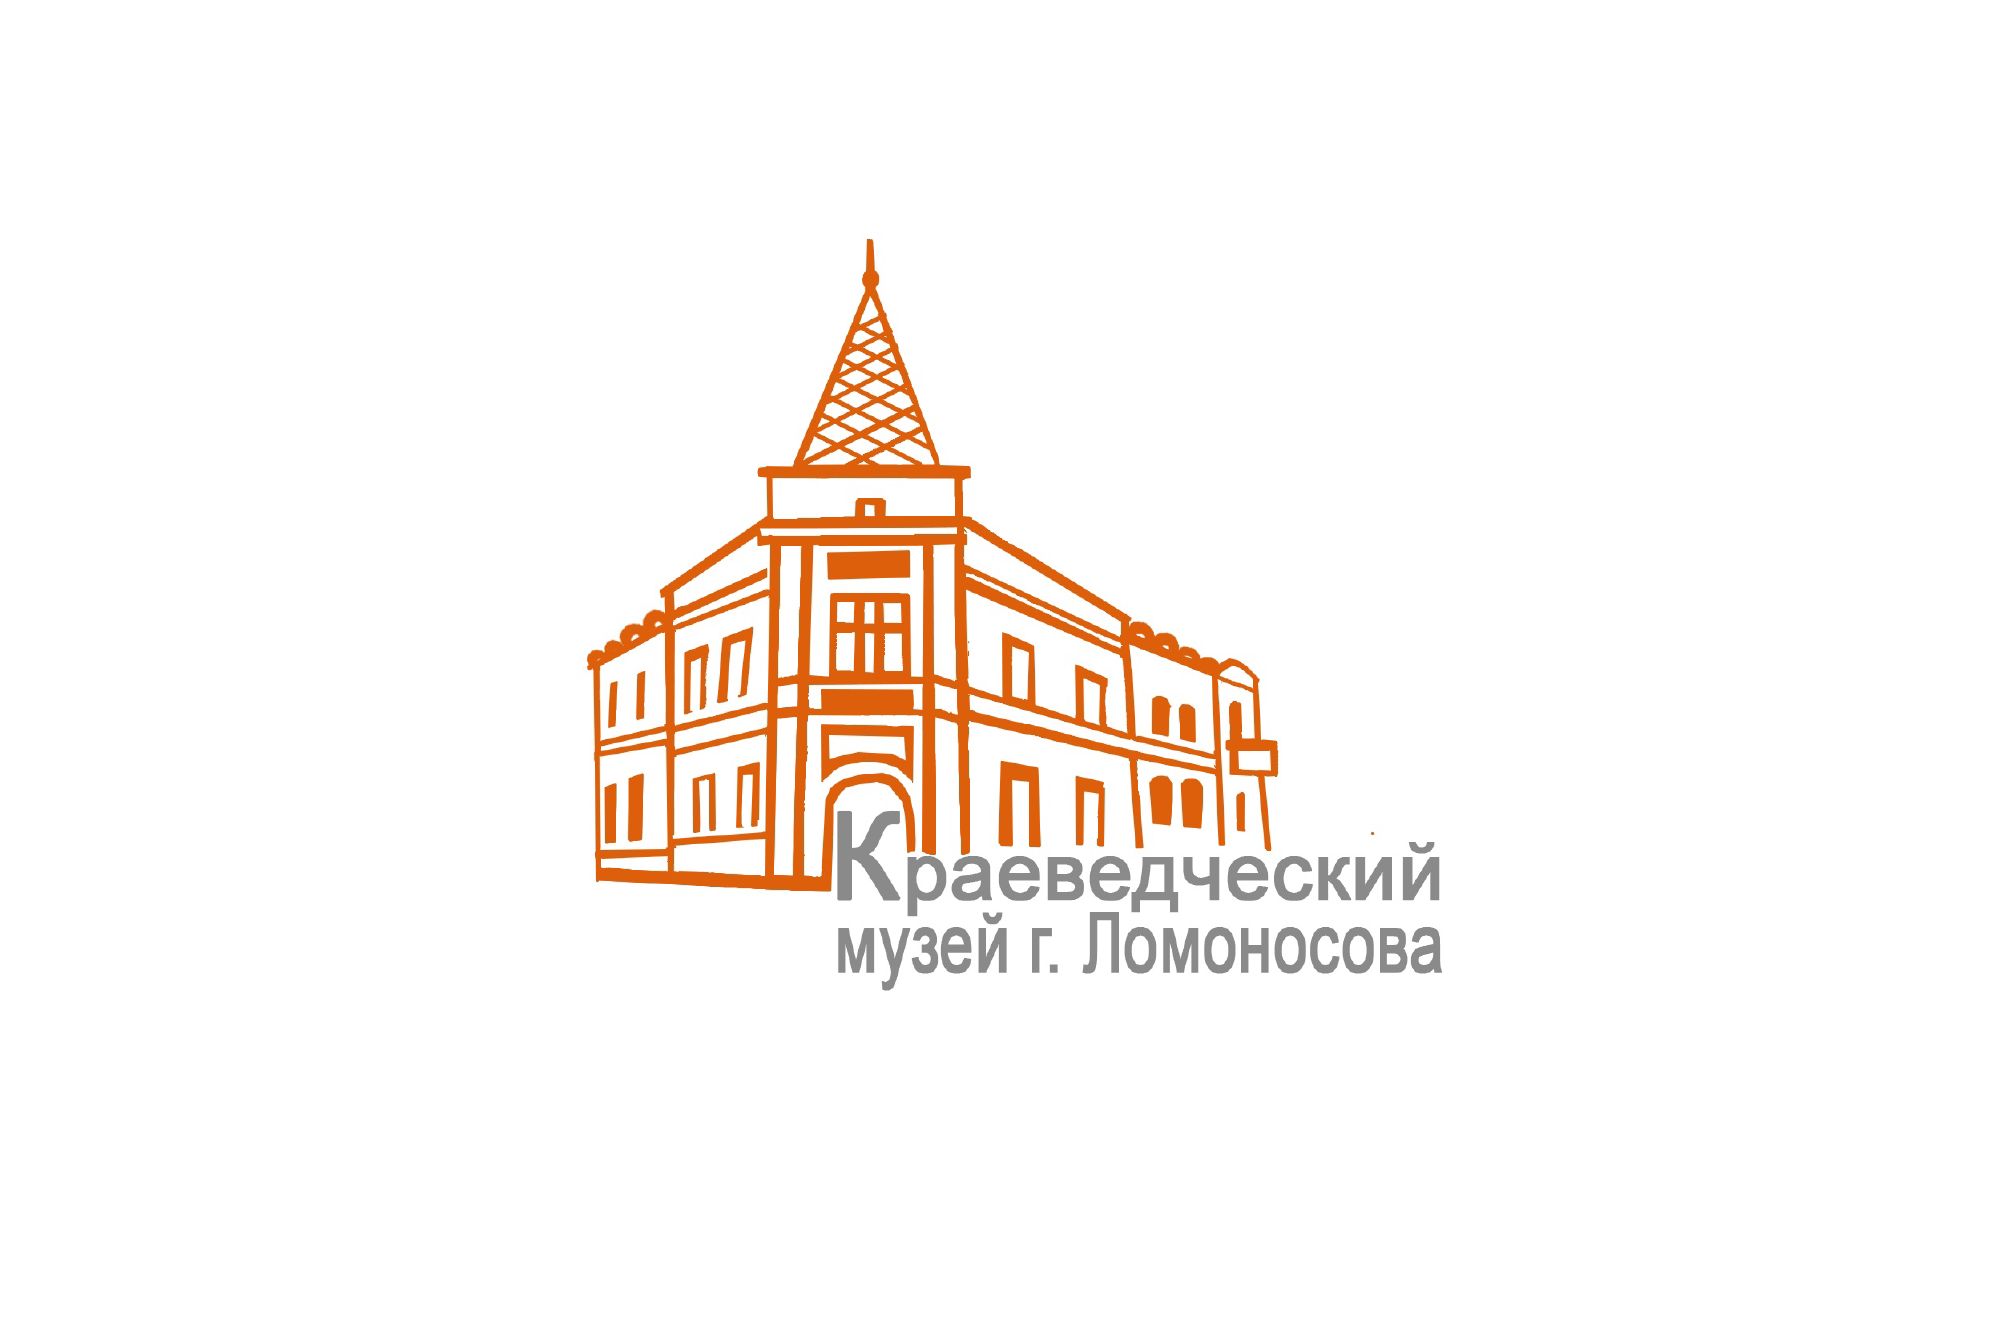 Lomonosov Museum of Local History